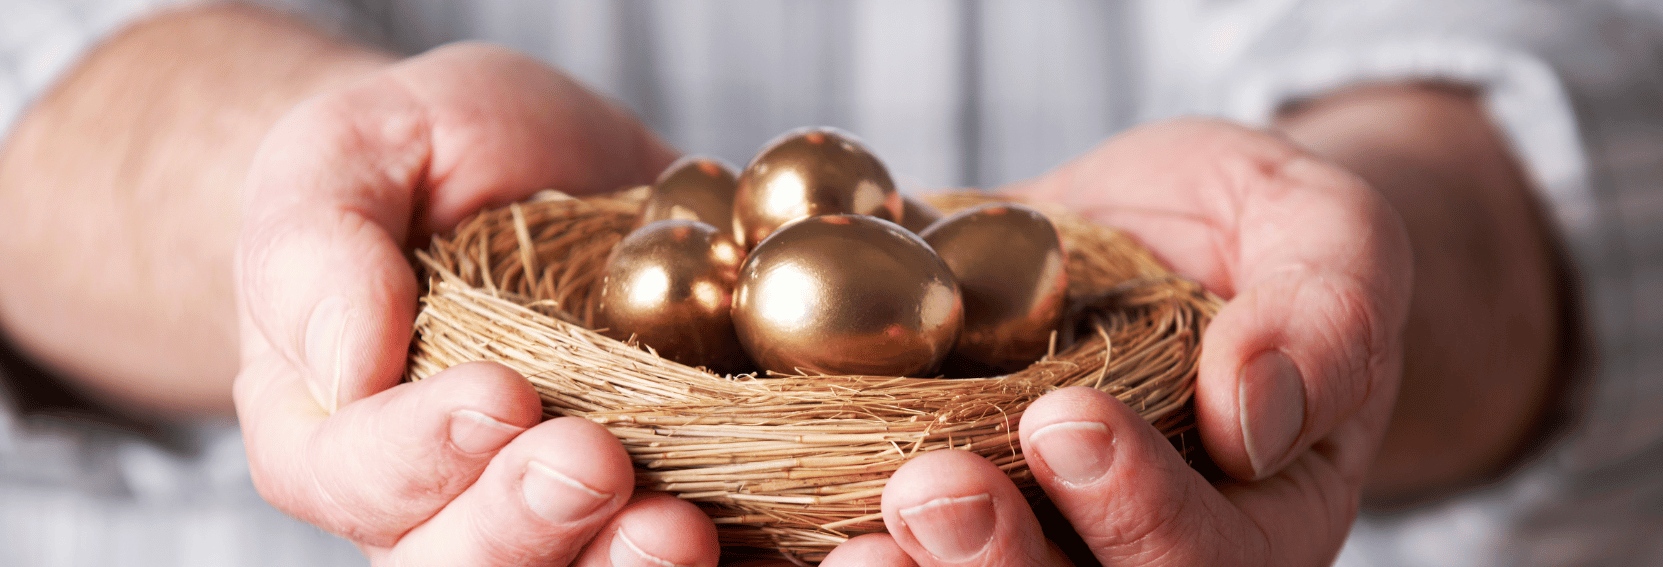 Man holding a nest of golden eggs